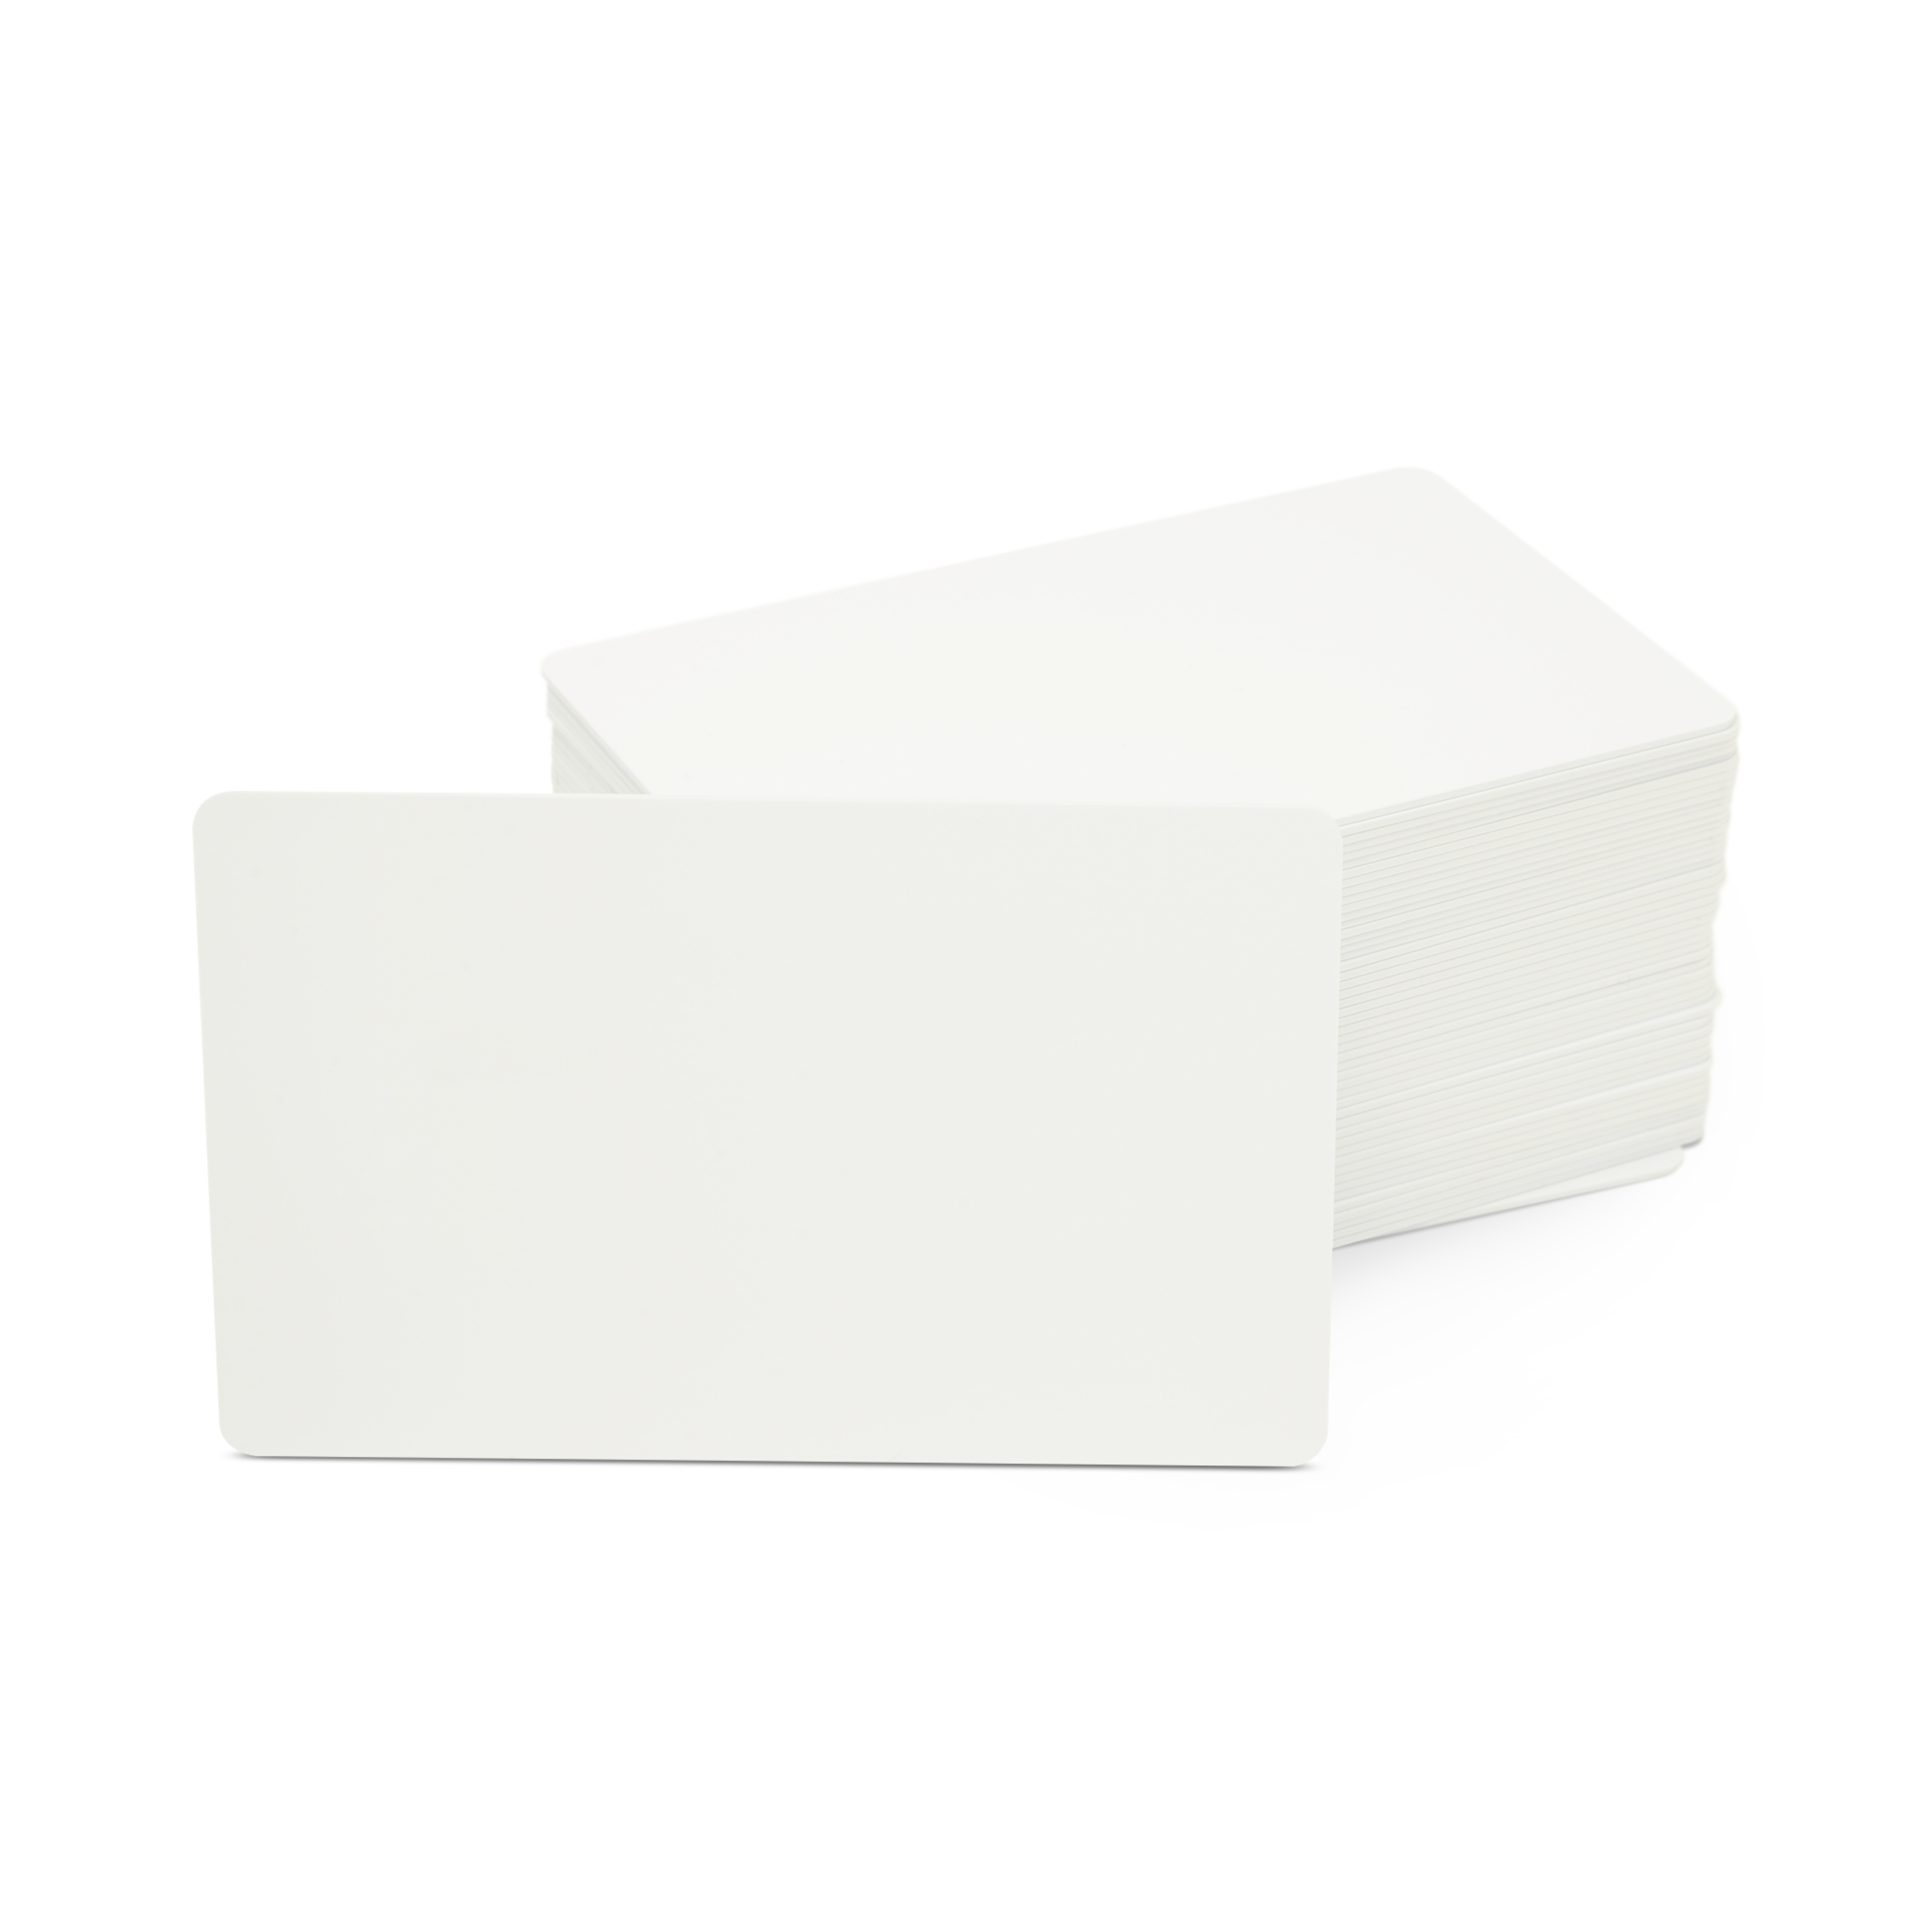 NFC Card PVC - 85,6 x 54 mm - I-CODE-SLIX - 128 Byte - white